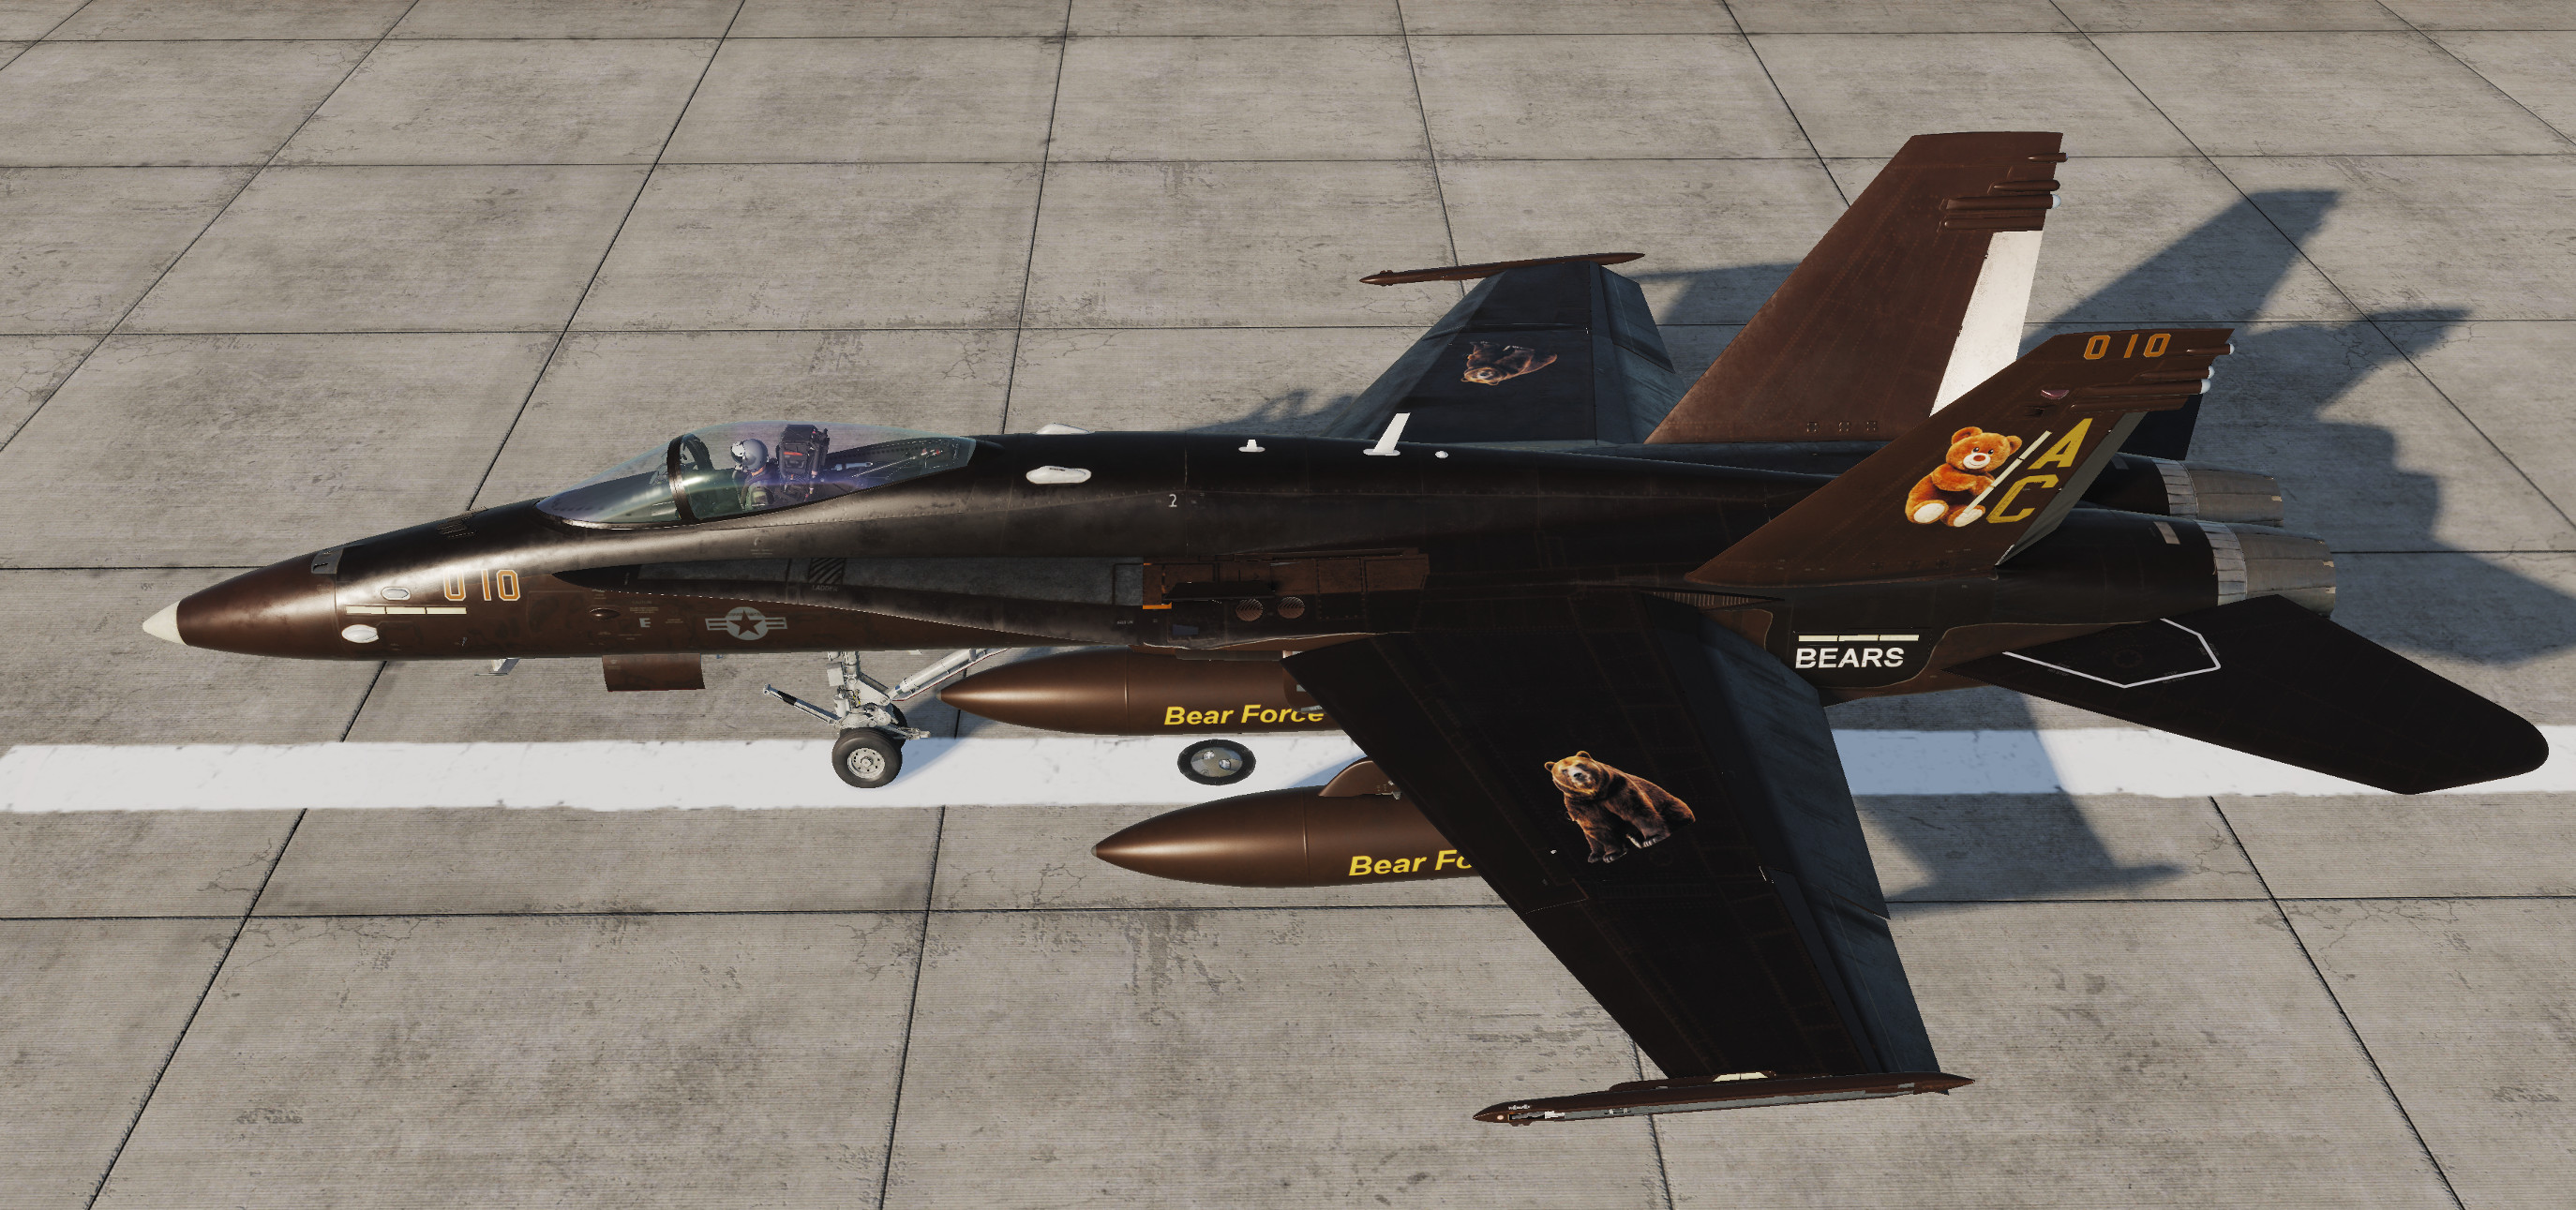 F/A-18C - BearForce Skin